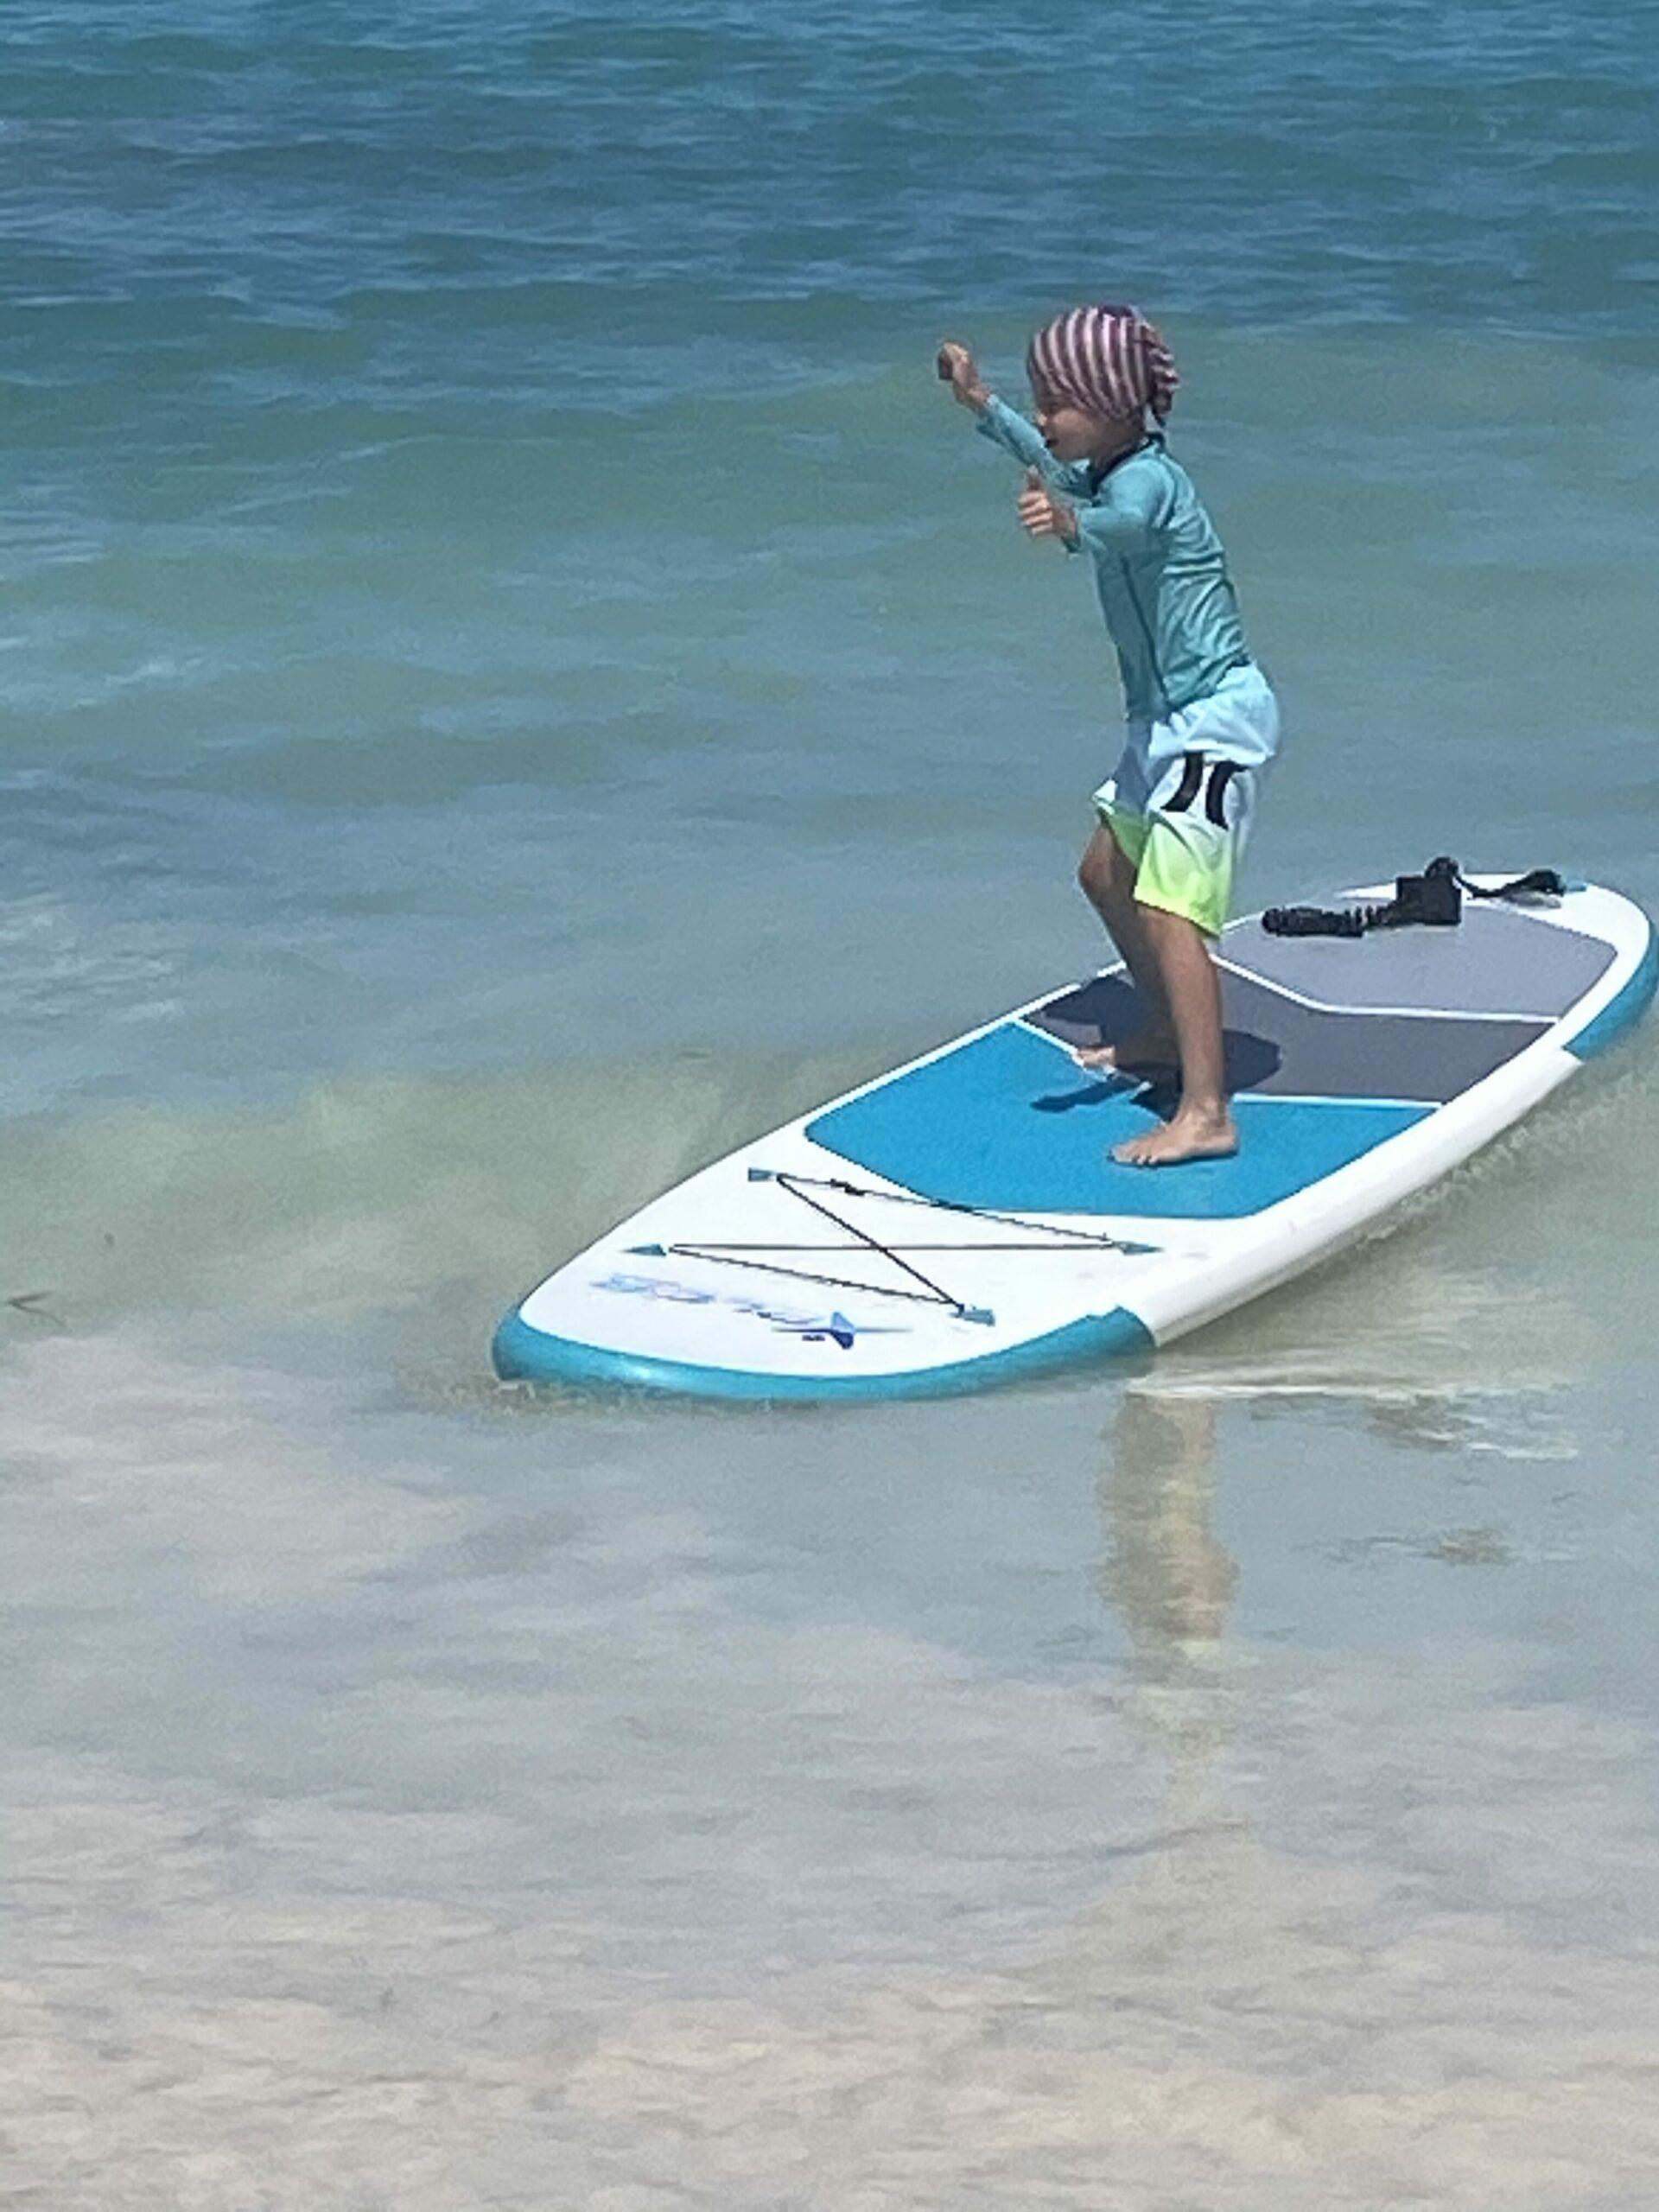 Xplor Boards: Unleashing the Adventurous Spirit in Kids through paddle boarding.